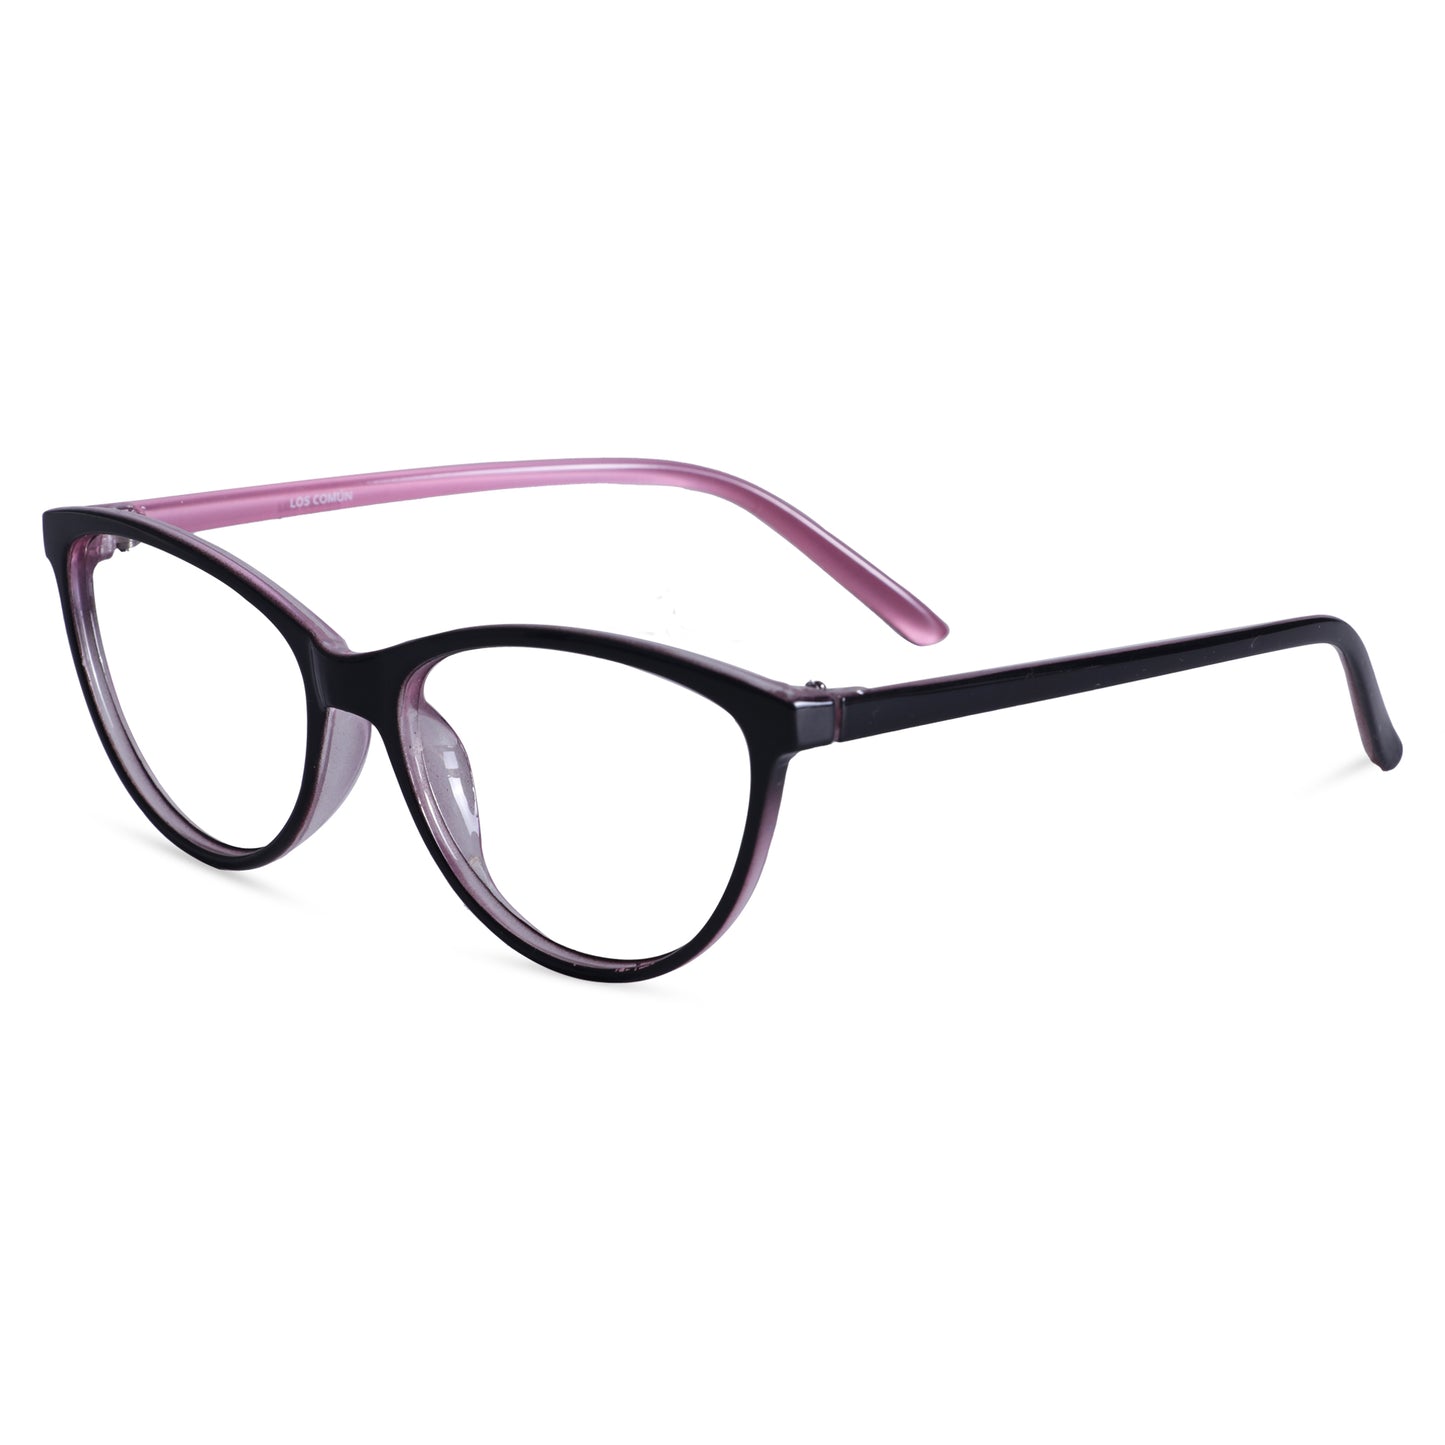 Loscomun Computer Glasses Black Purple Cateye Eyeglasses